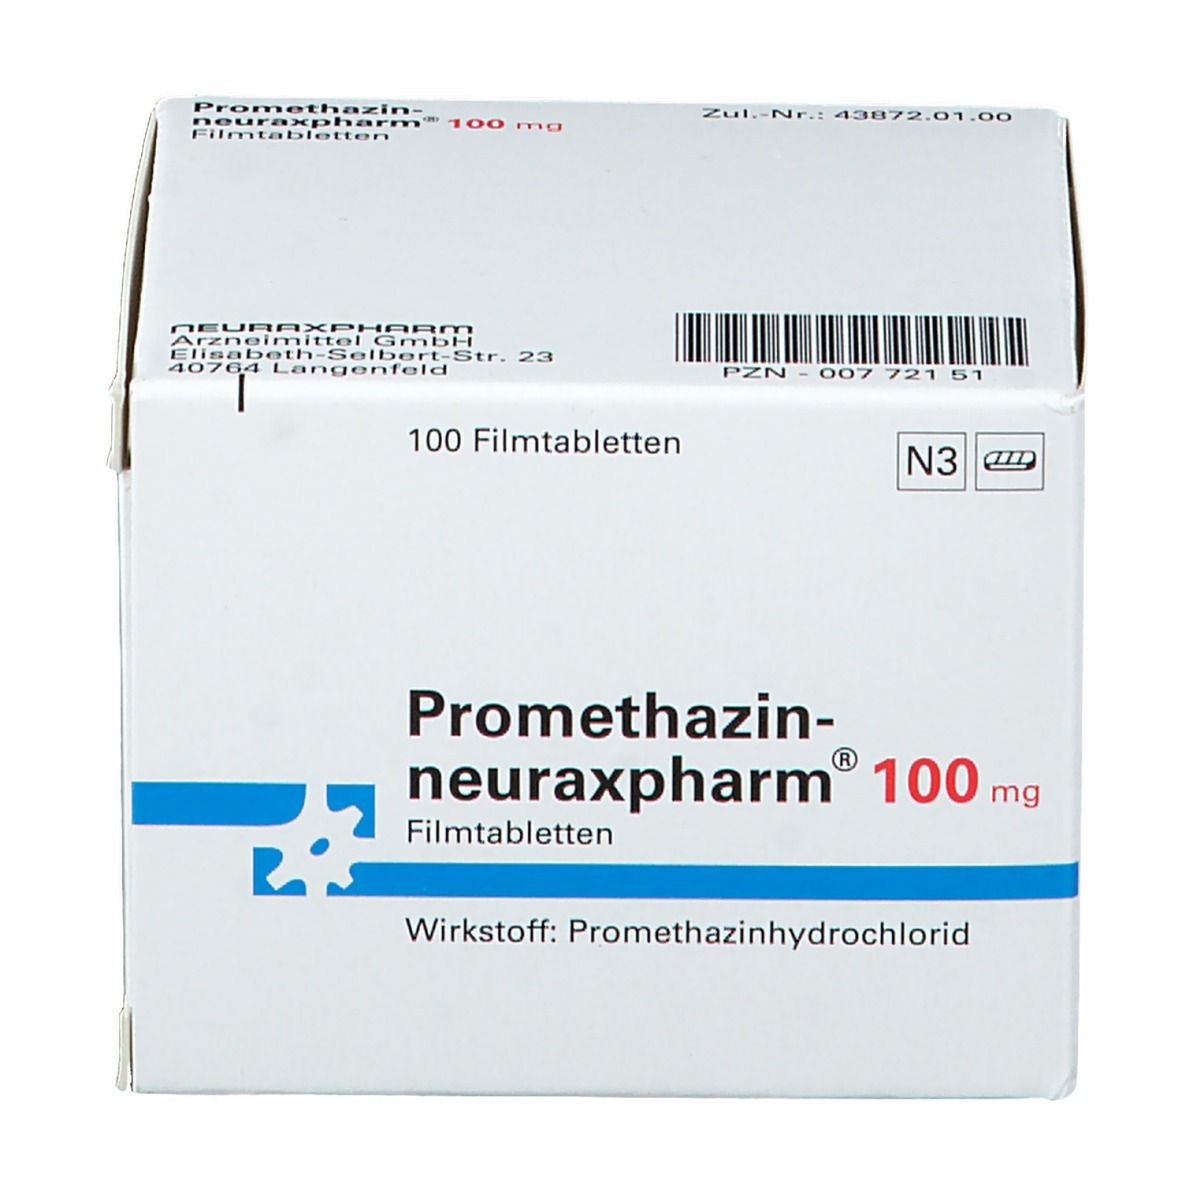 Promethazin-neuraxpharm® 100 mg